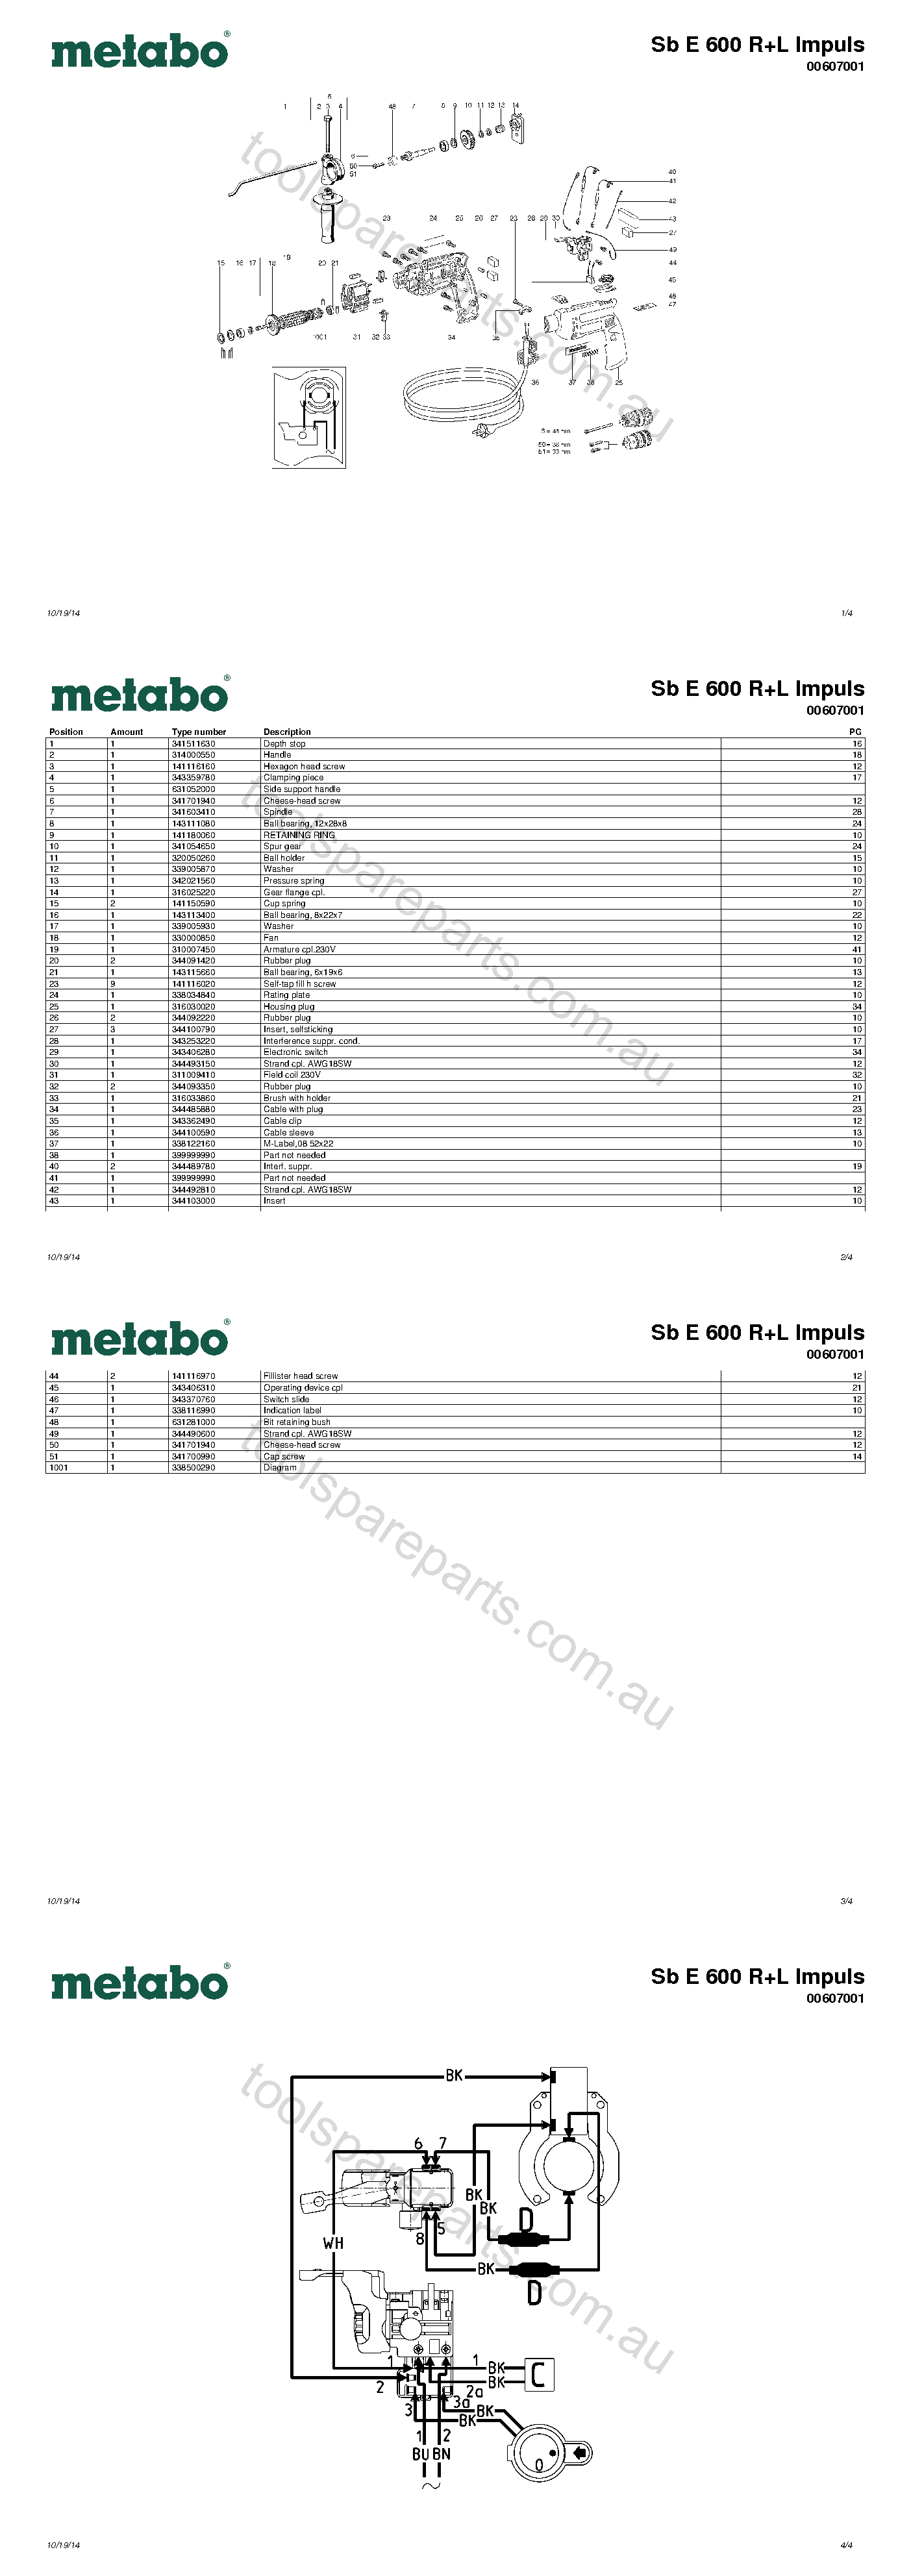 Metabo Sb E 600 R+L Impuls 00607001  Diagram 1